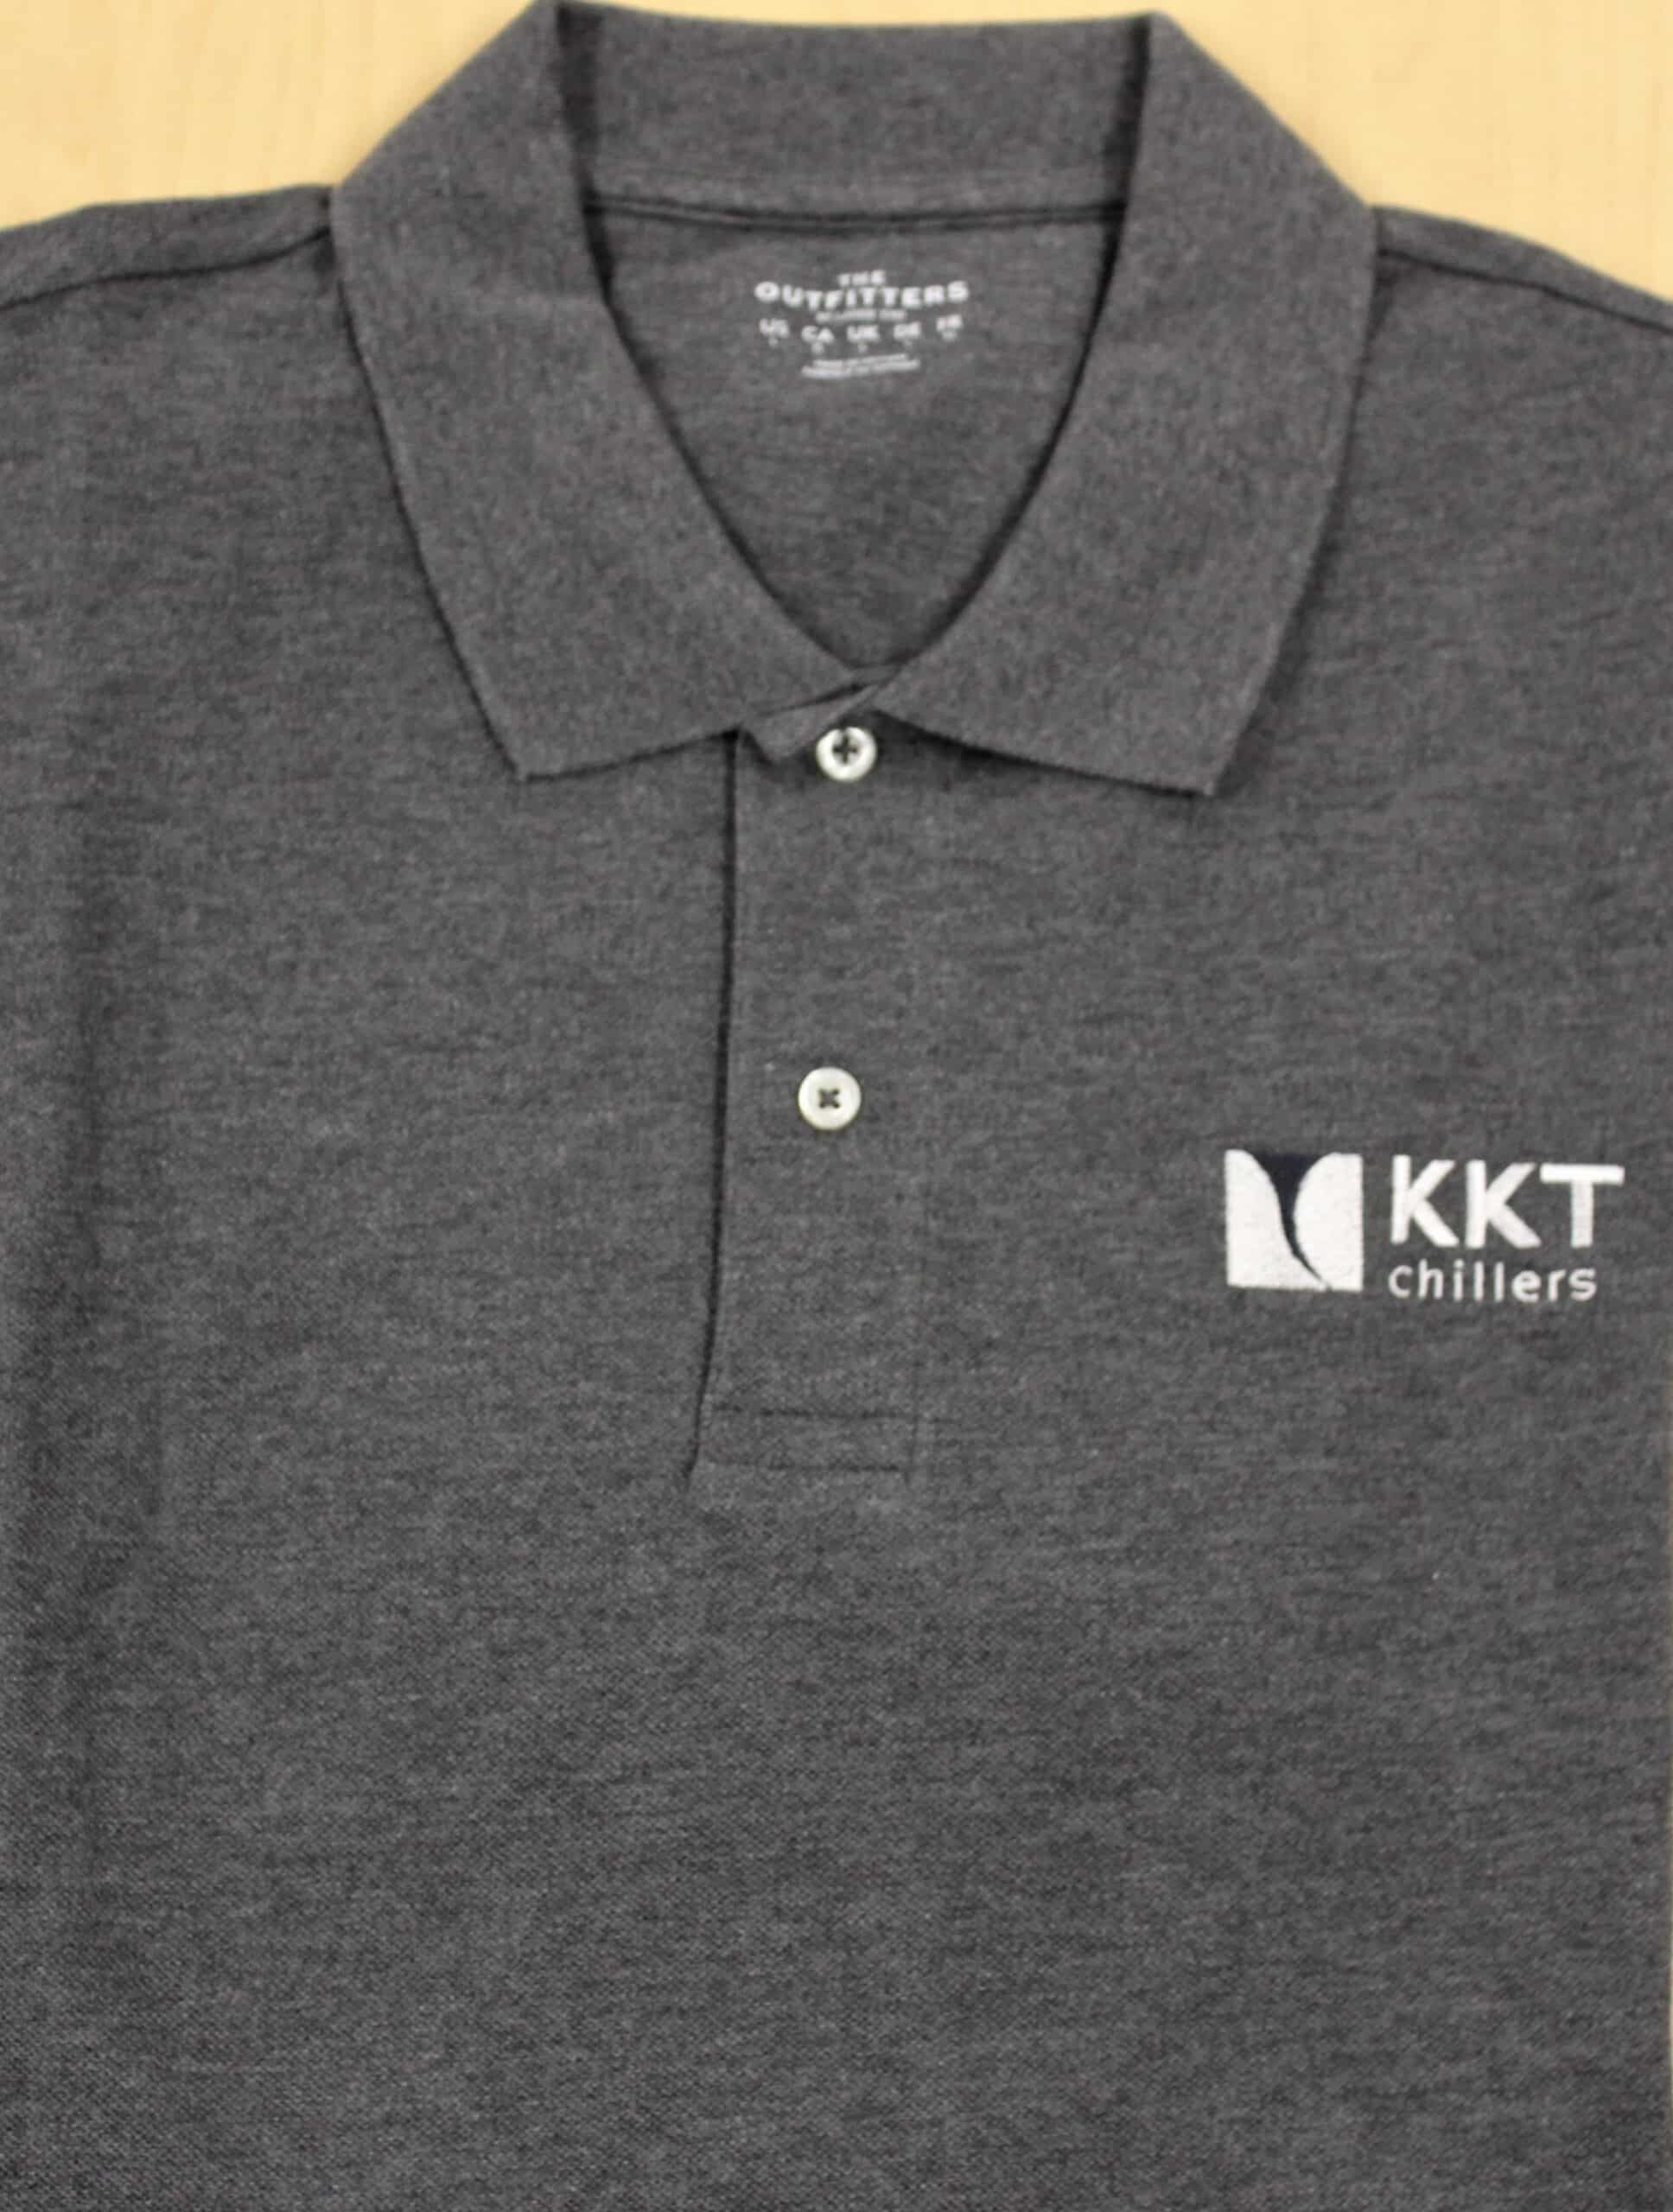 Polo Shirt - KKT chillers USA